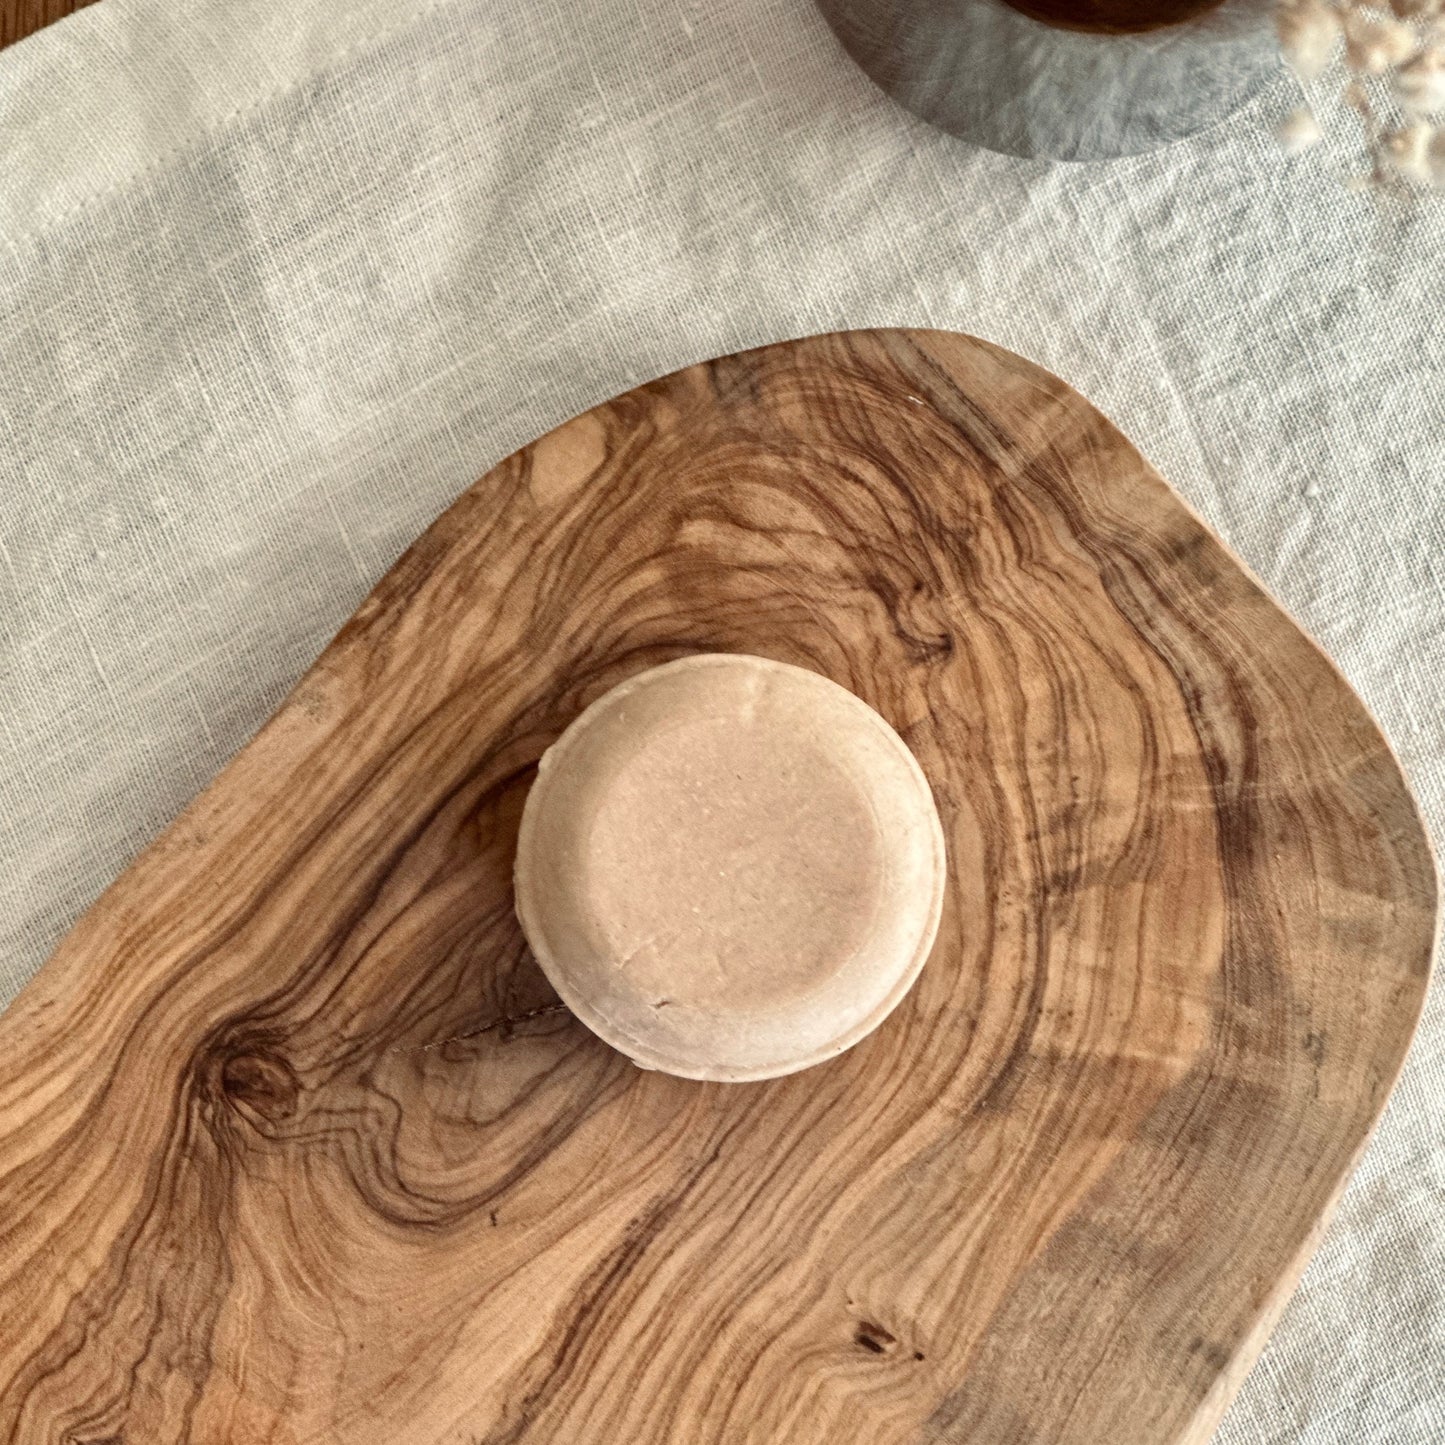 pink solid shampoo bar on olive wood board